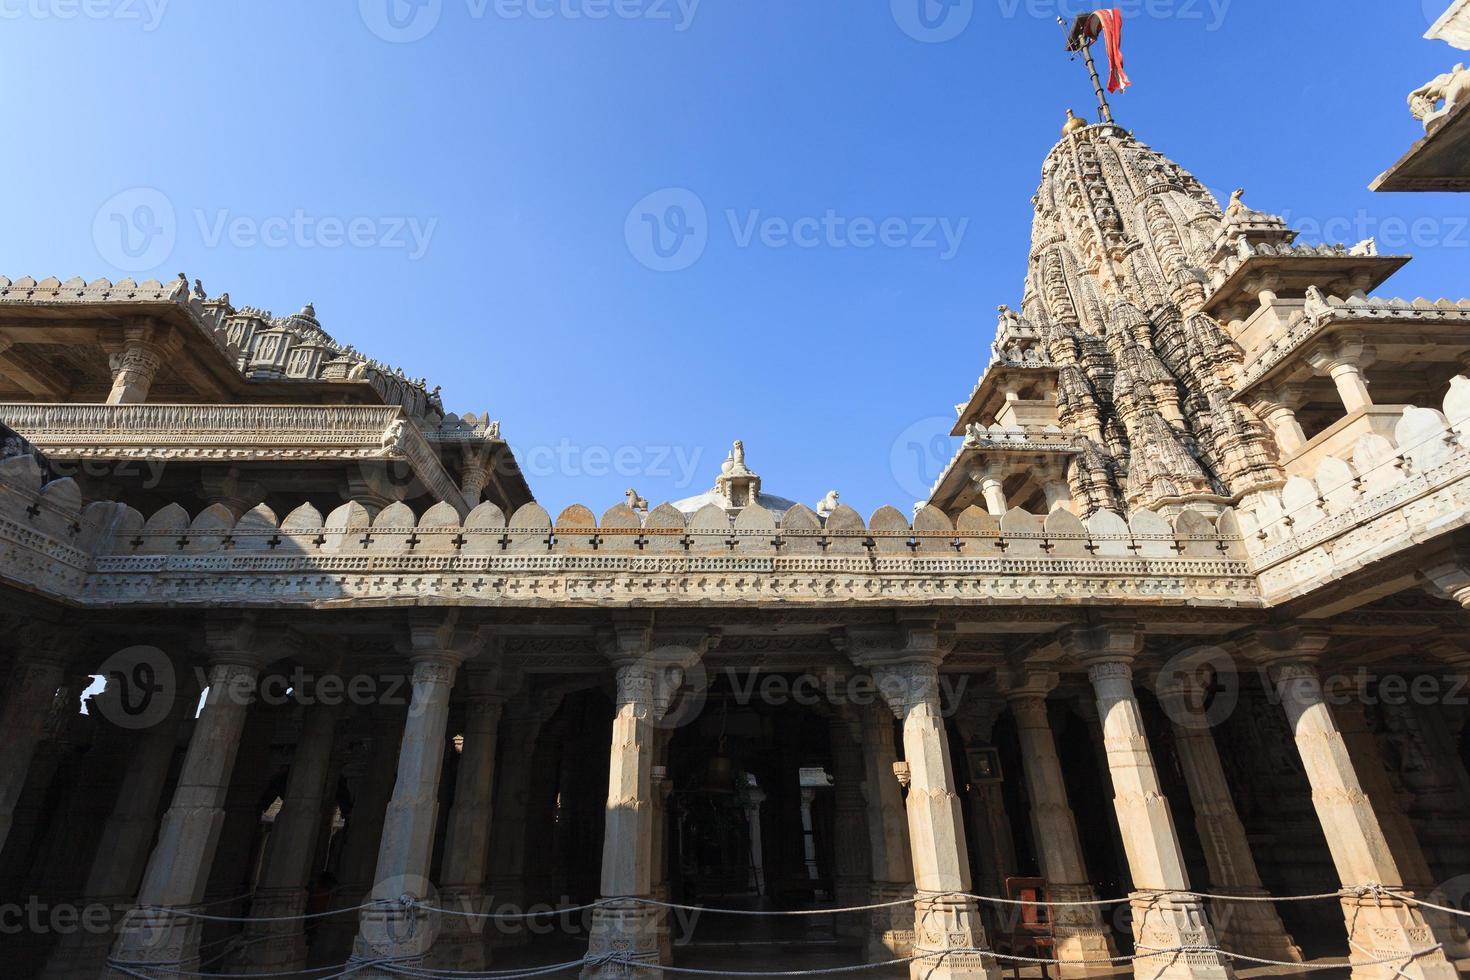 ranakpur jain tempel i Rajasthan, Indien foto